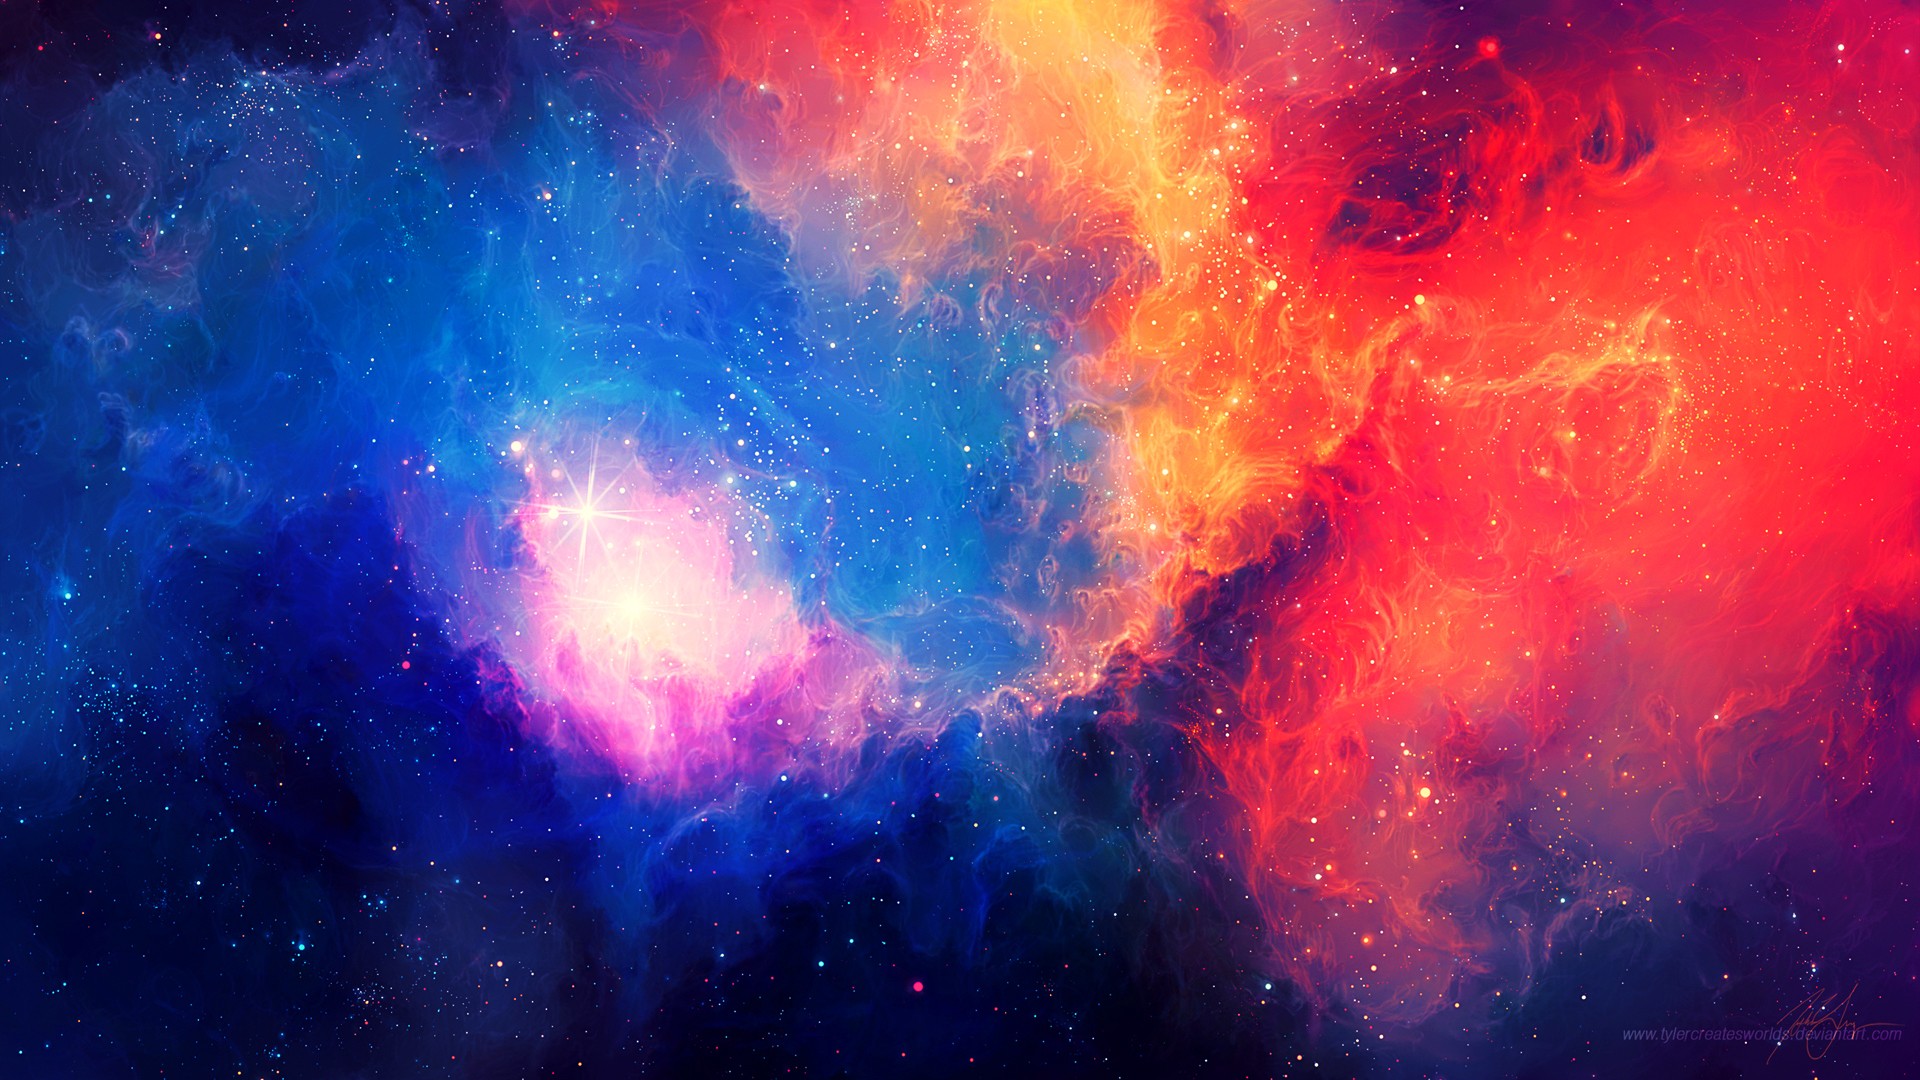 Amazing Colorful Nebula and Stars wallpaper   ForWallpapercom